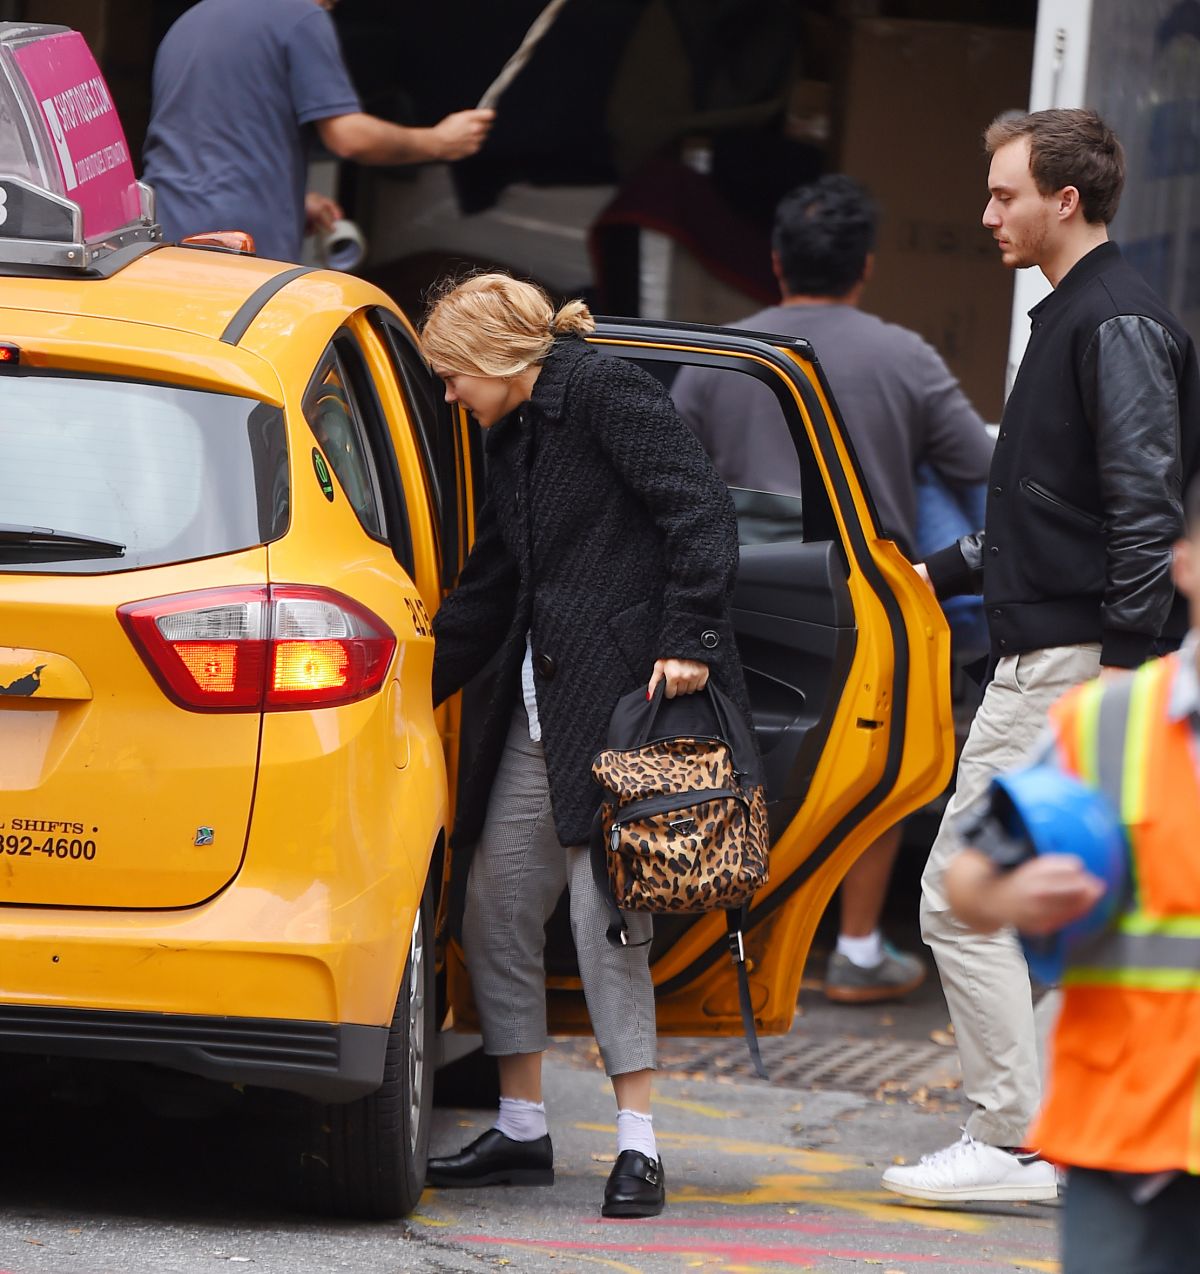 Spectre's Lea Seydoux and boyfriend Andre Meyer enjoy kiss in a New York  cab